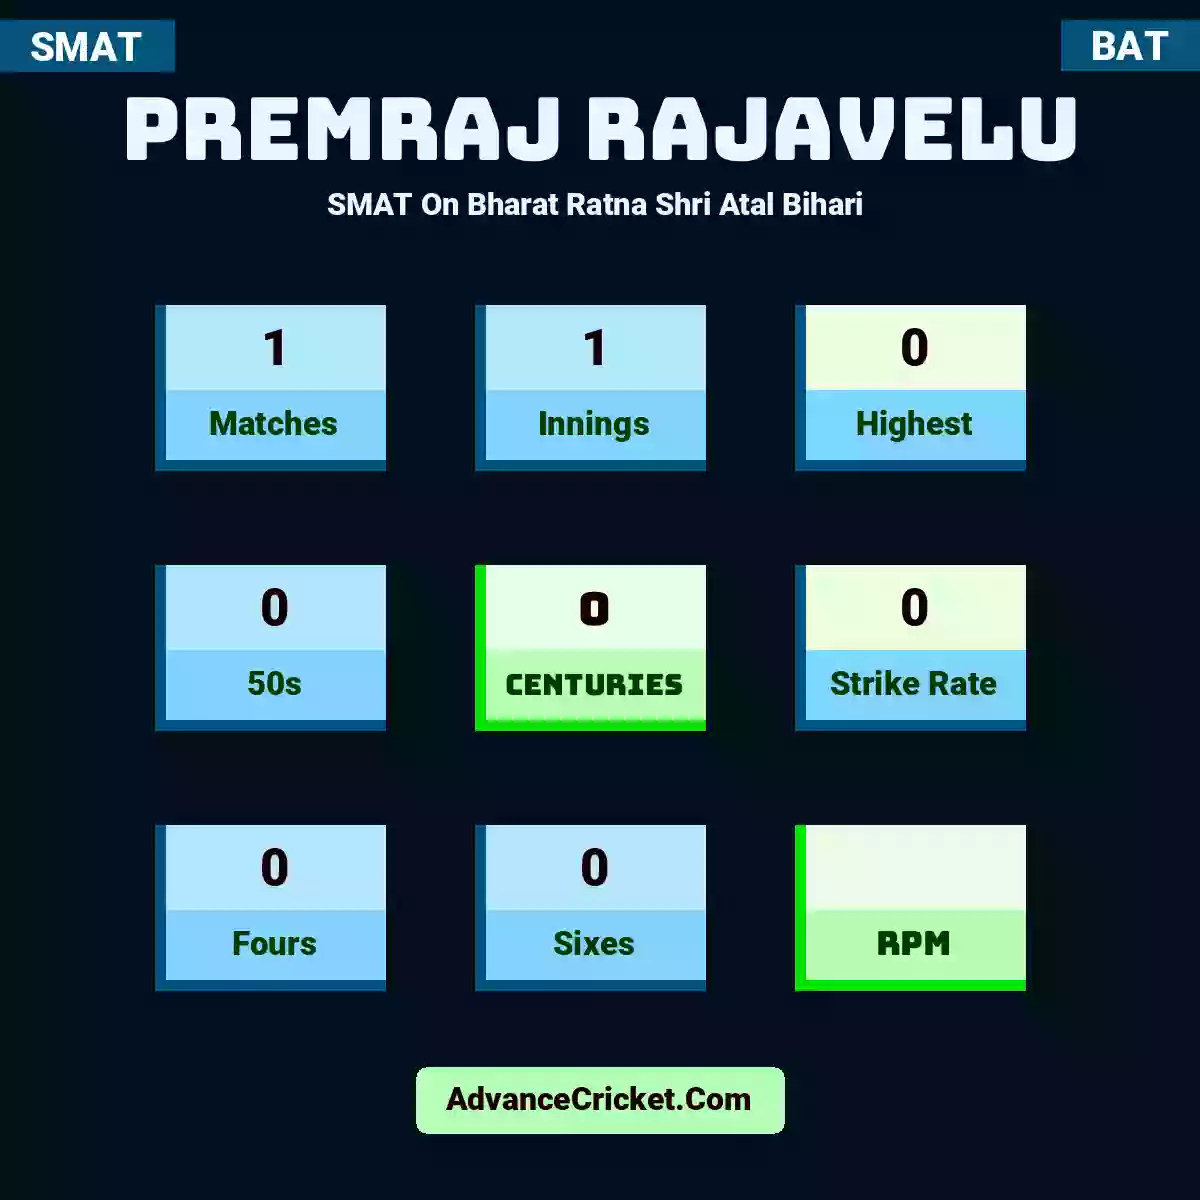 Premraj Rajavelu SMAT  On Bharat Ratna Shri Atal Bihari , Premraj Rajavelu played 1 matches, scored 0 runs as highest, 0 half-centuries, and 0 centuries, with a strike rate of 0. P.Rajavelu hit 0 fours and 0 sixes.